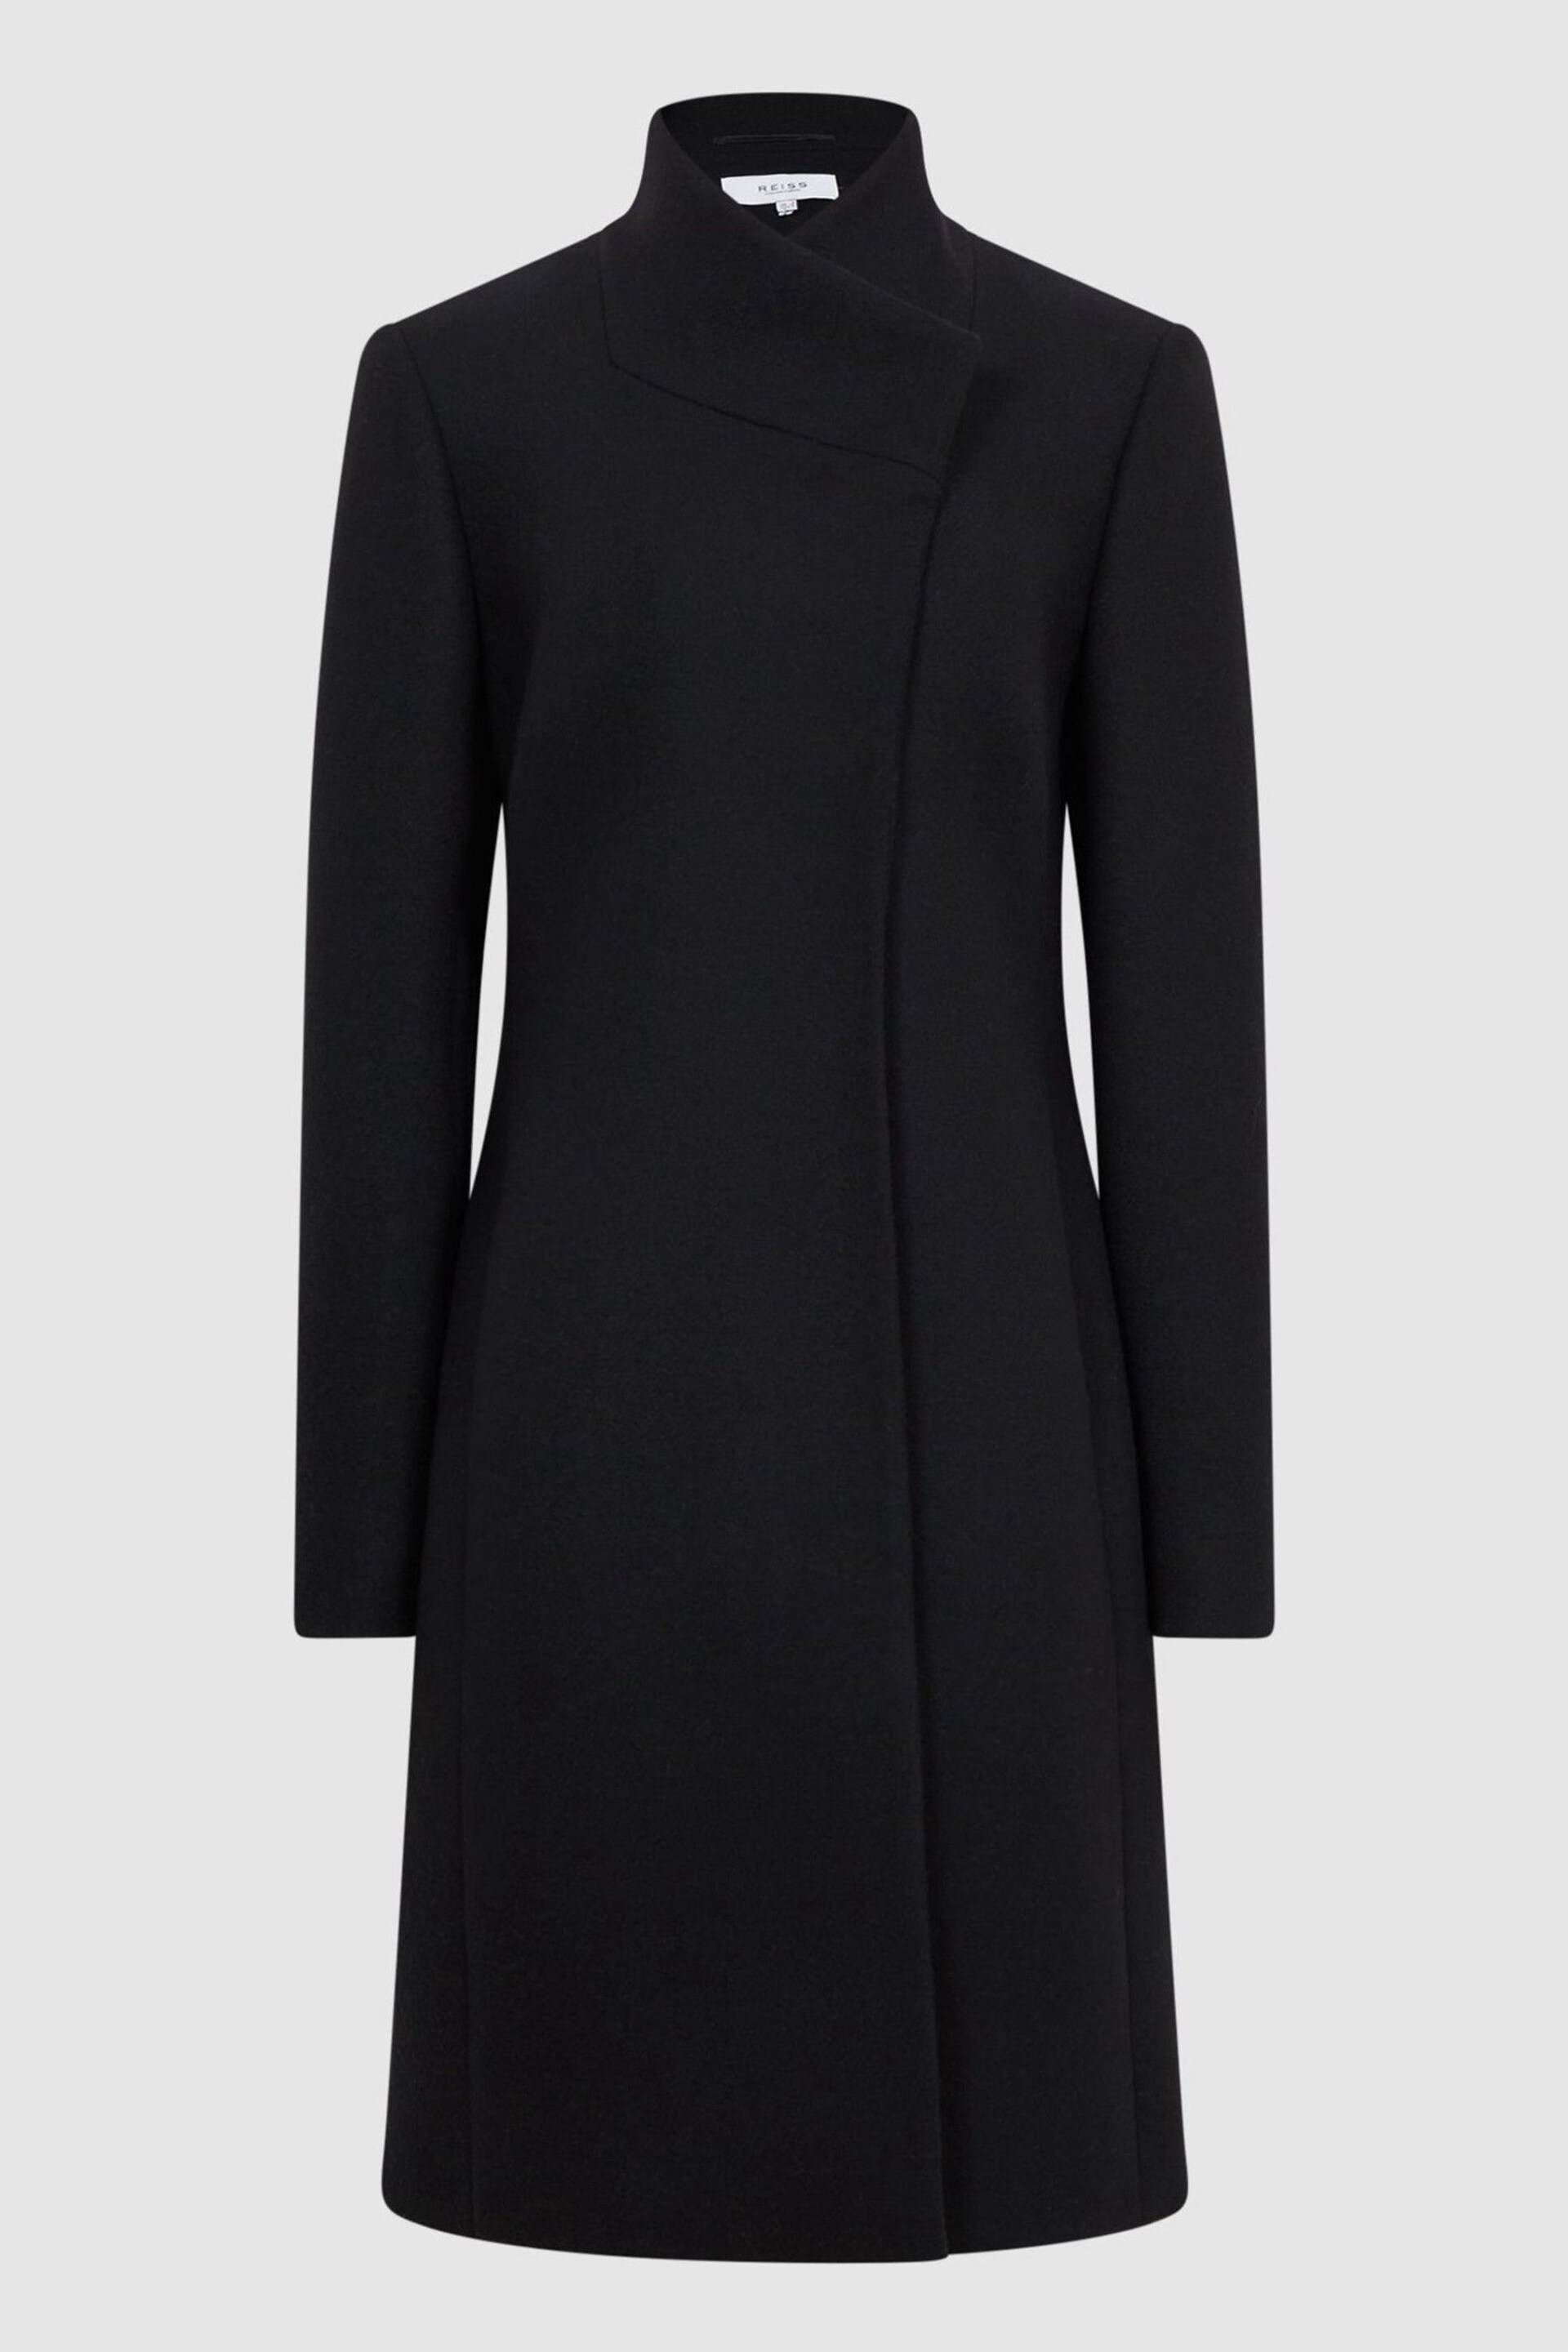 Reiss Black Mia Petite Wool Blend Mid-Length Coat - Image 2 of 7